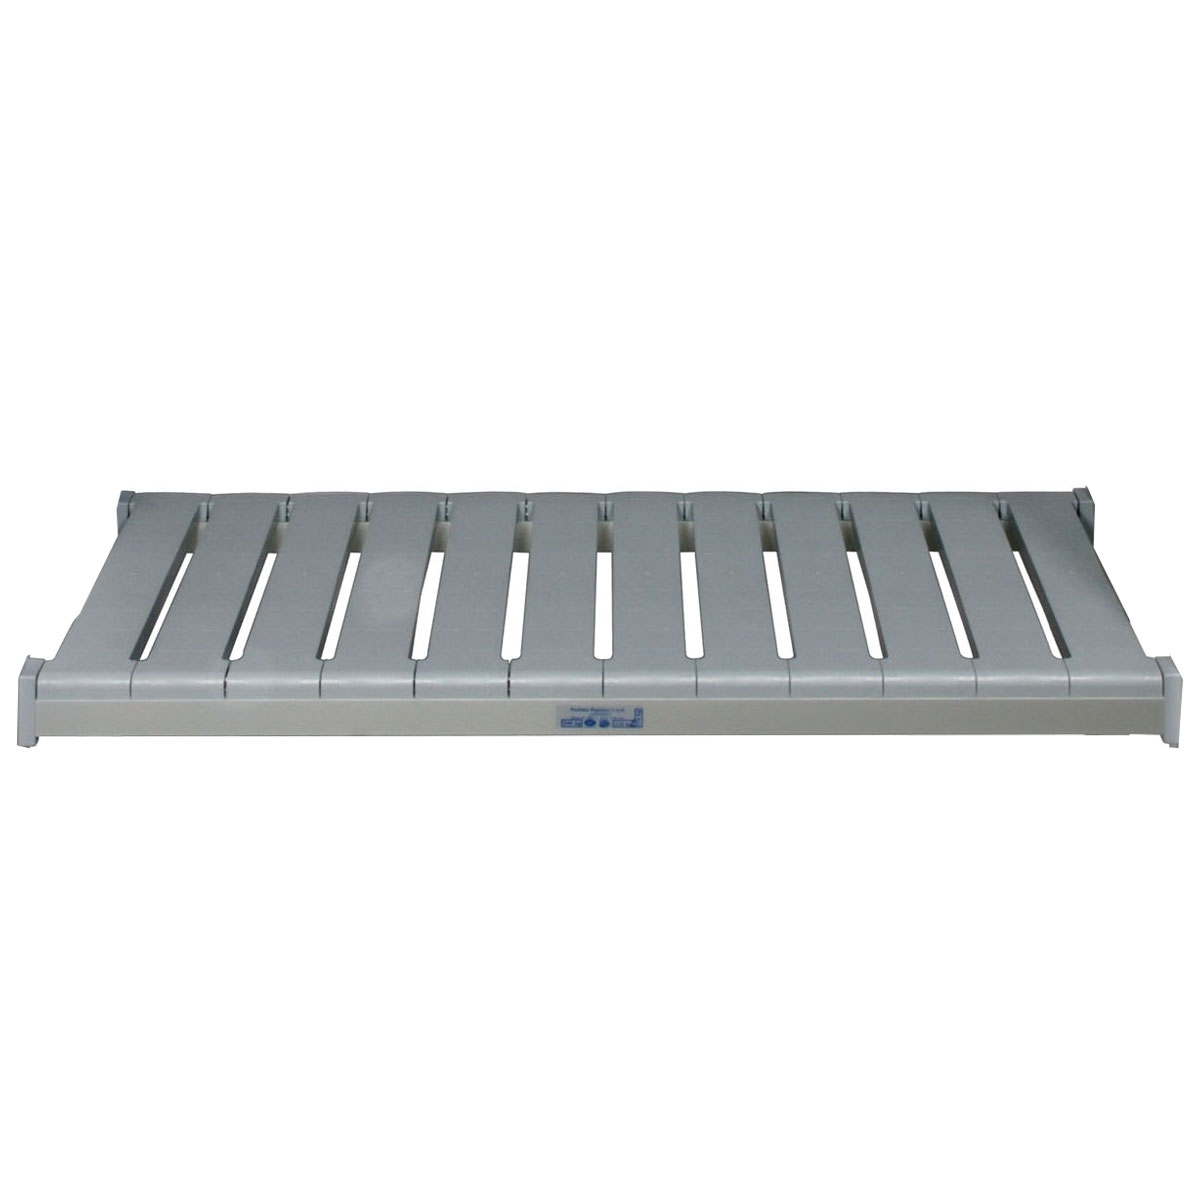 Eko Fit Polymer Range Additional Shelf - W770 x D375mm - KFS450